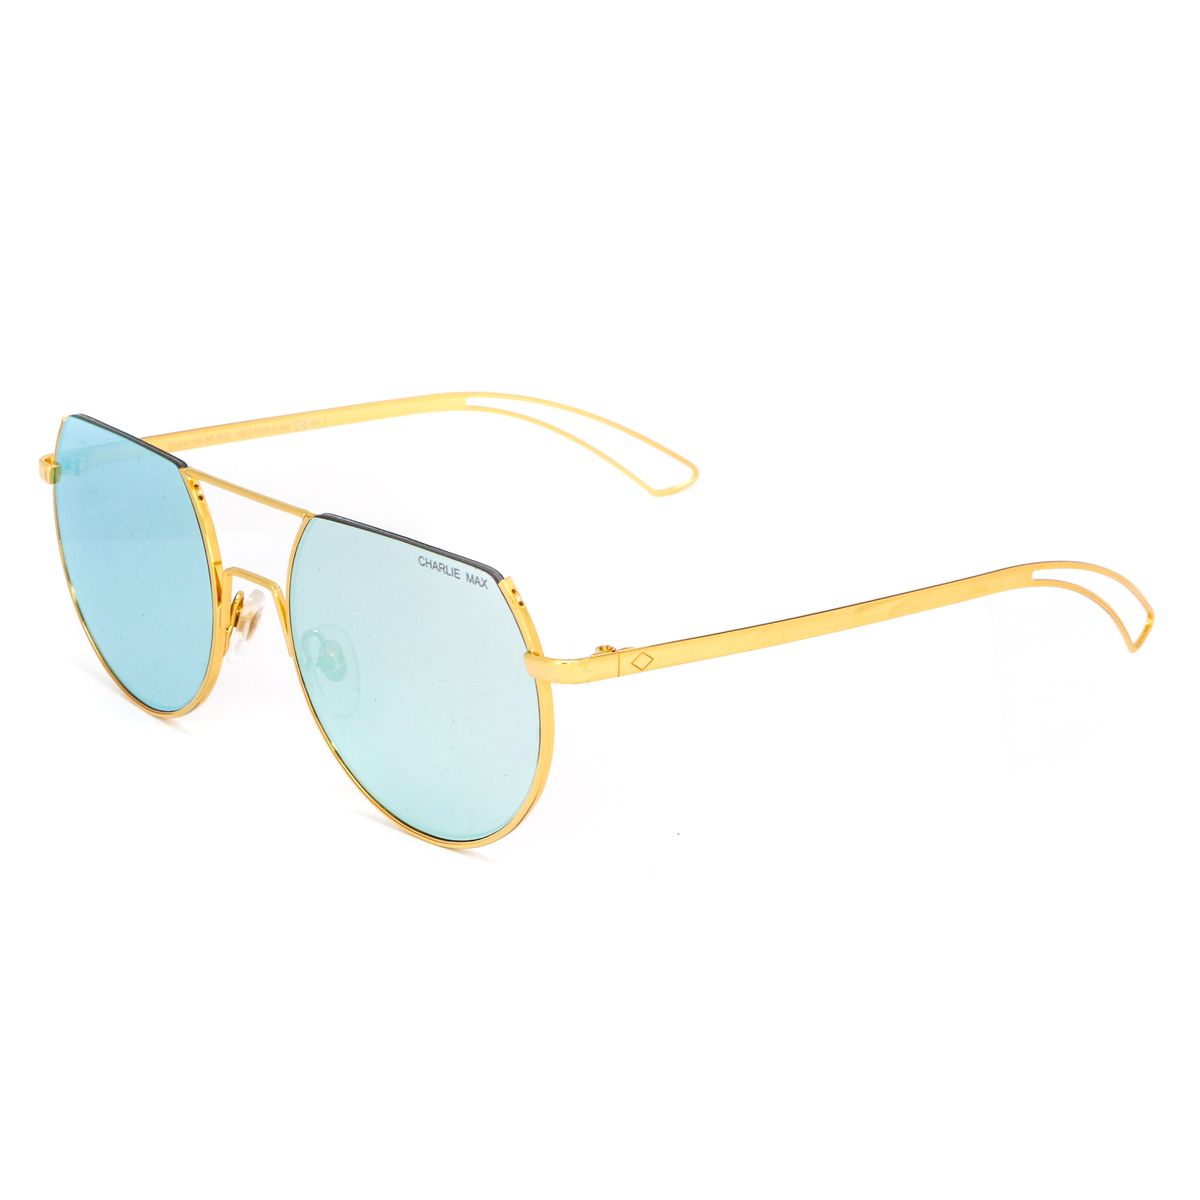 PONTACCIO Round Sunglasses GL B23 - size 55